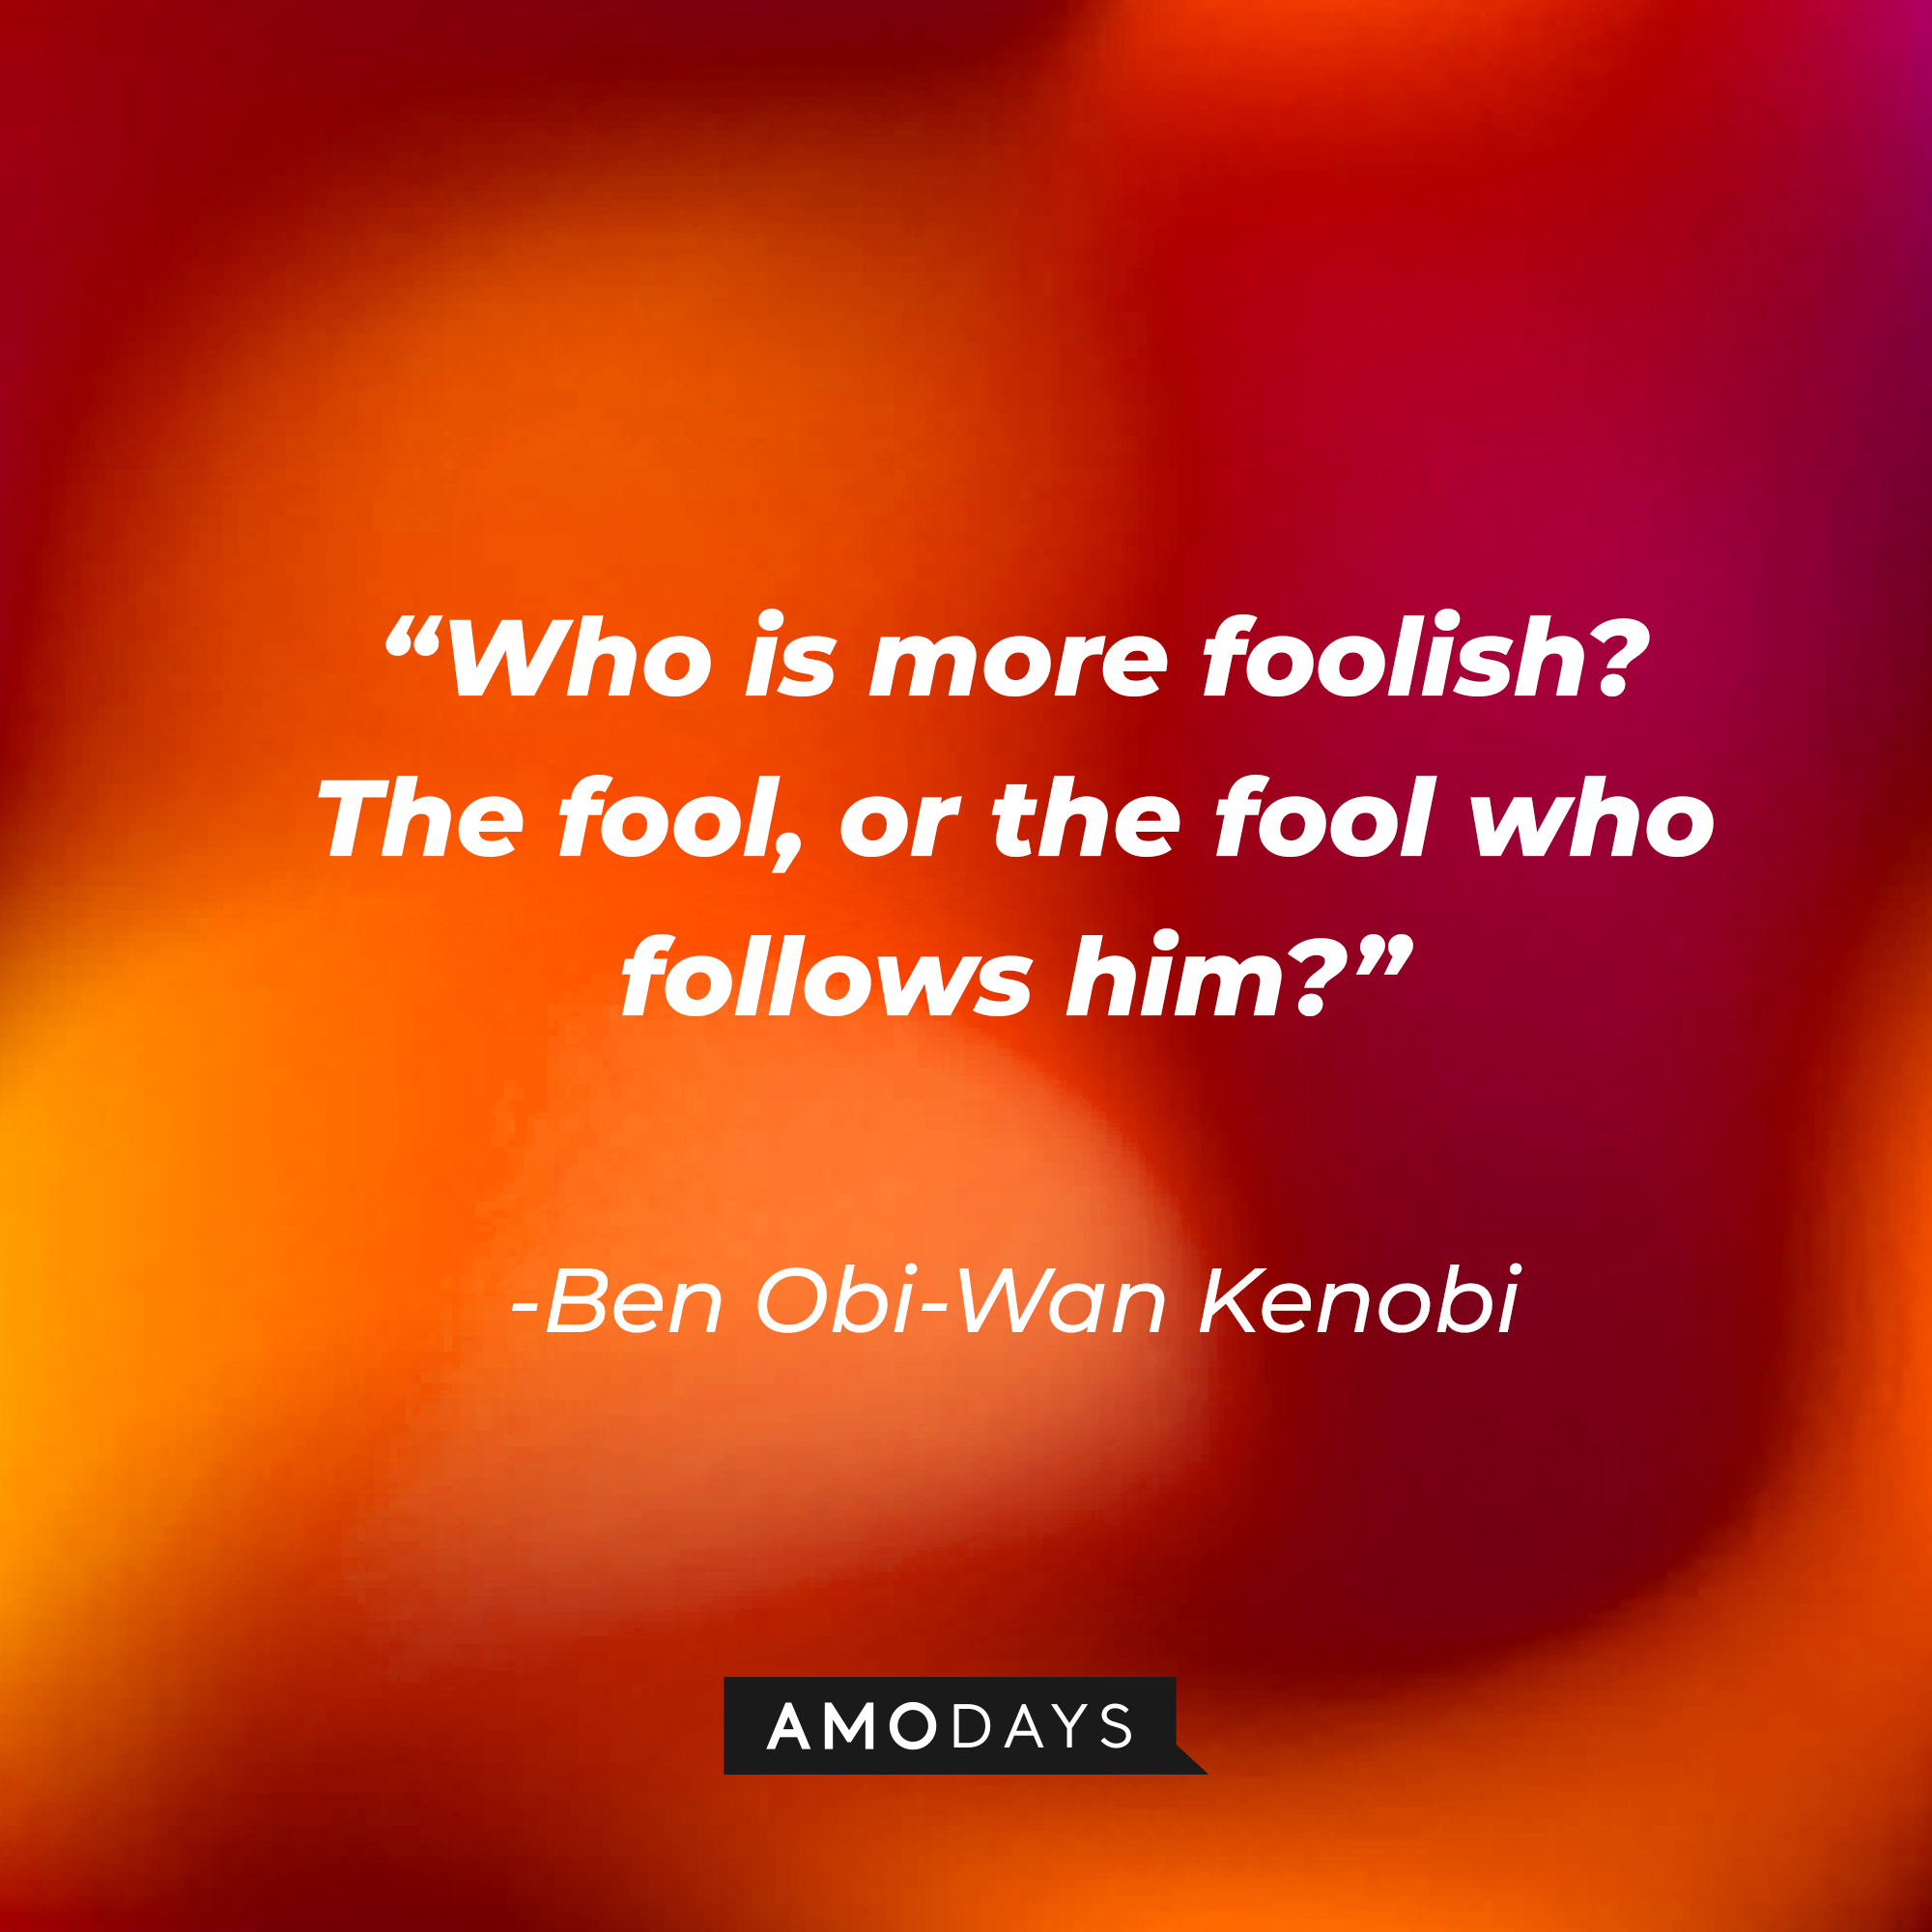 Ben Obi-Wan Kenobi's quote: "Who is more foolish? The fool, or the fool who follows him?" | Source: facebook.com/StarWars